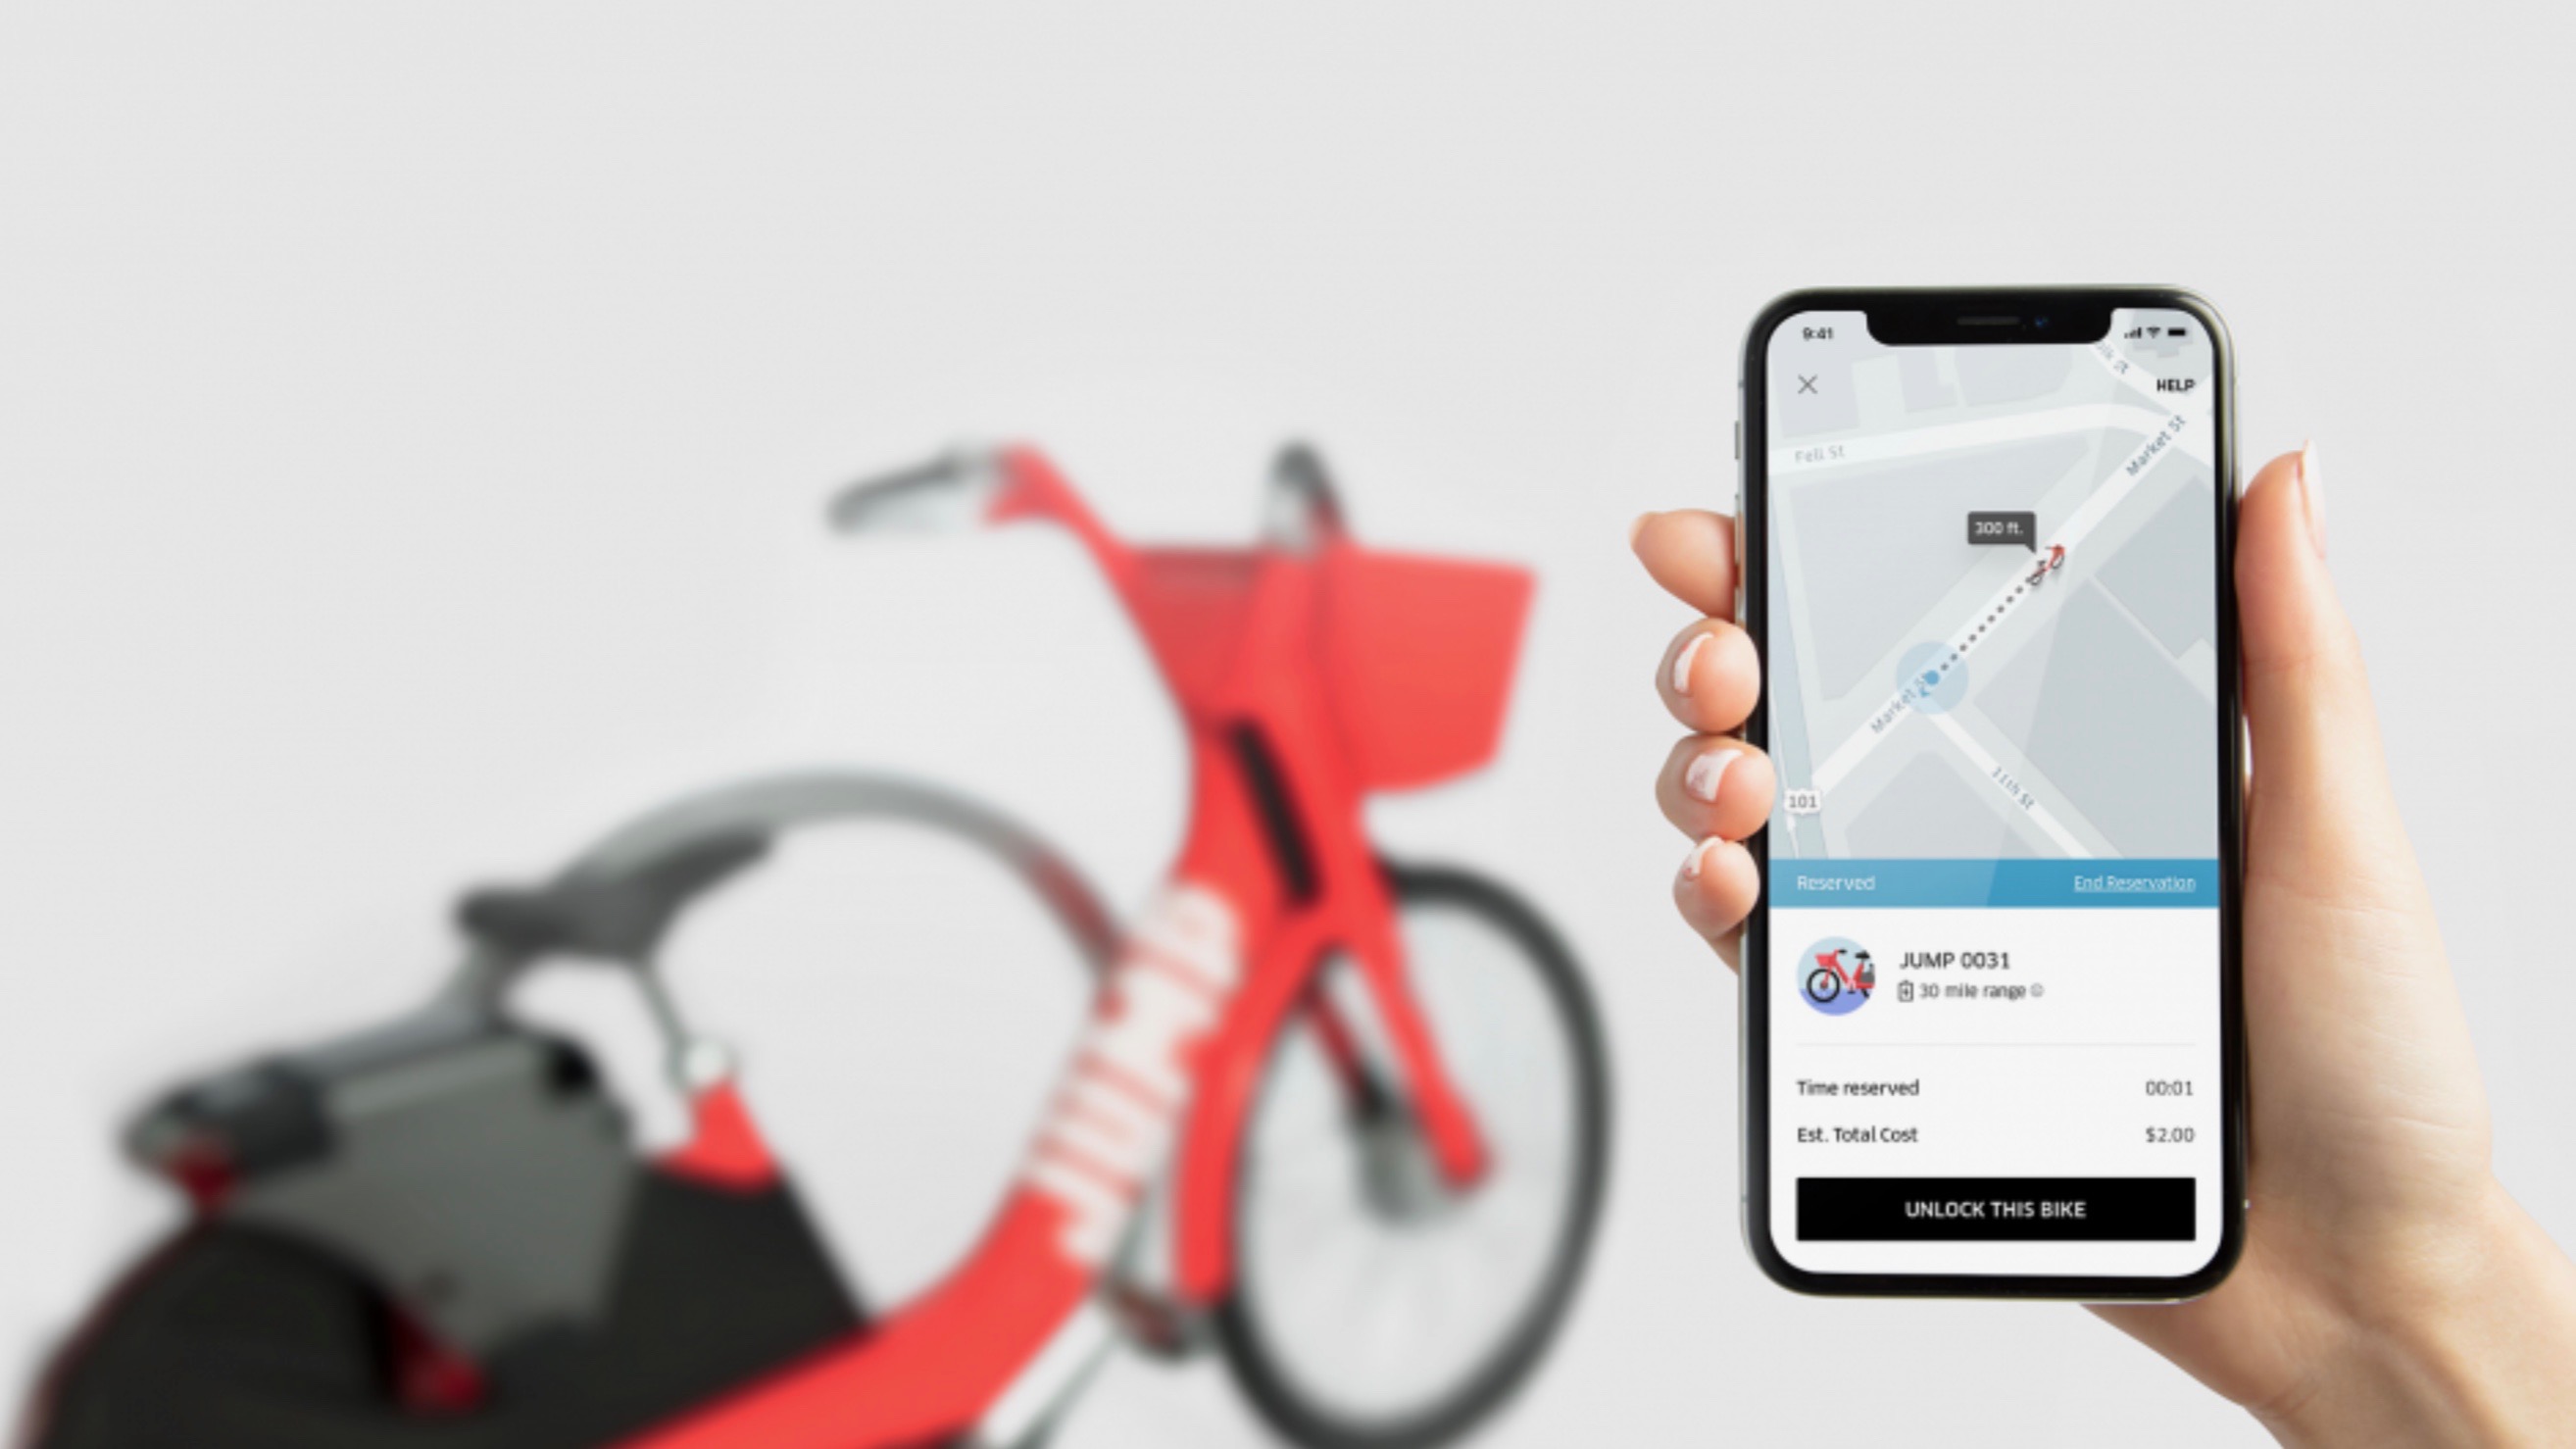 bikes/scooters, more via iOS app 